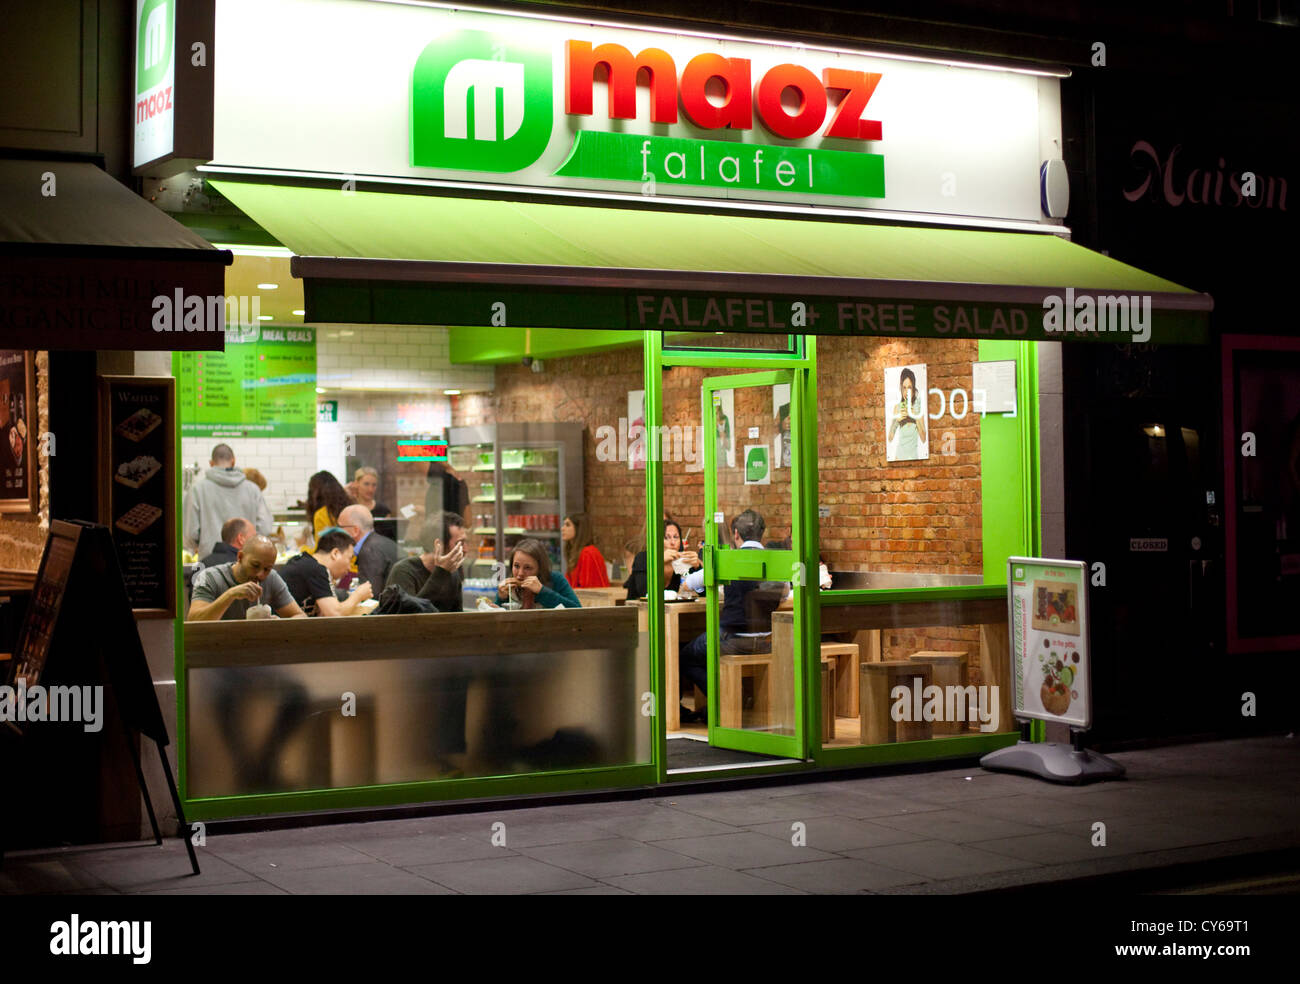 Maoz Falafel vegetarian restaurant, Soho, London, England, UK. Stock Photo